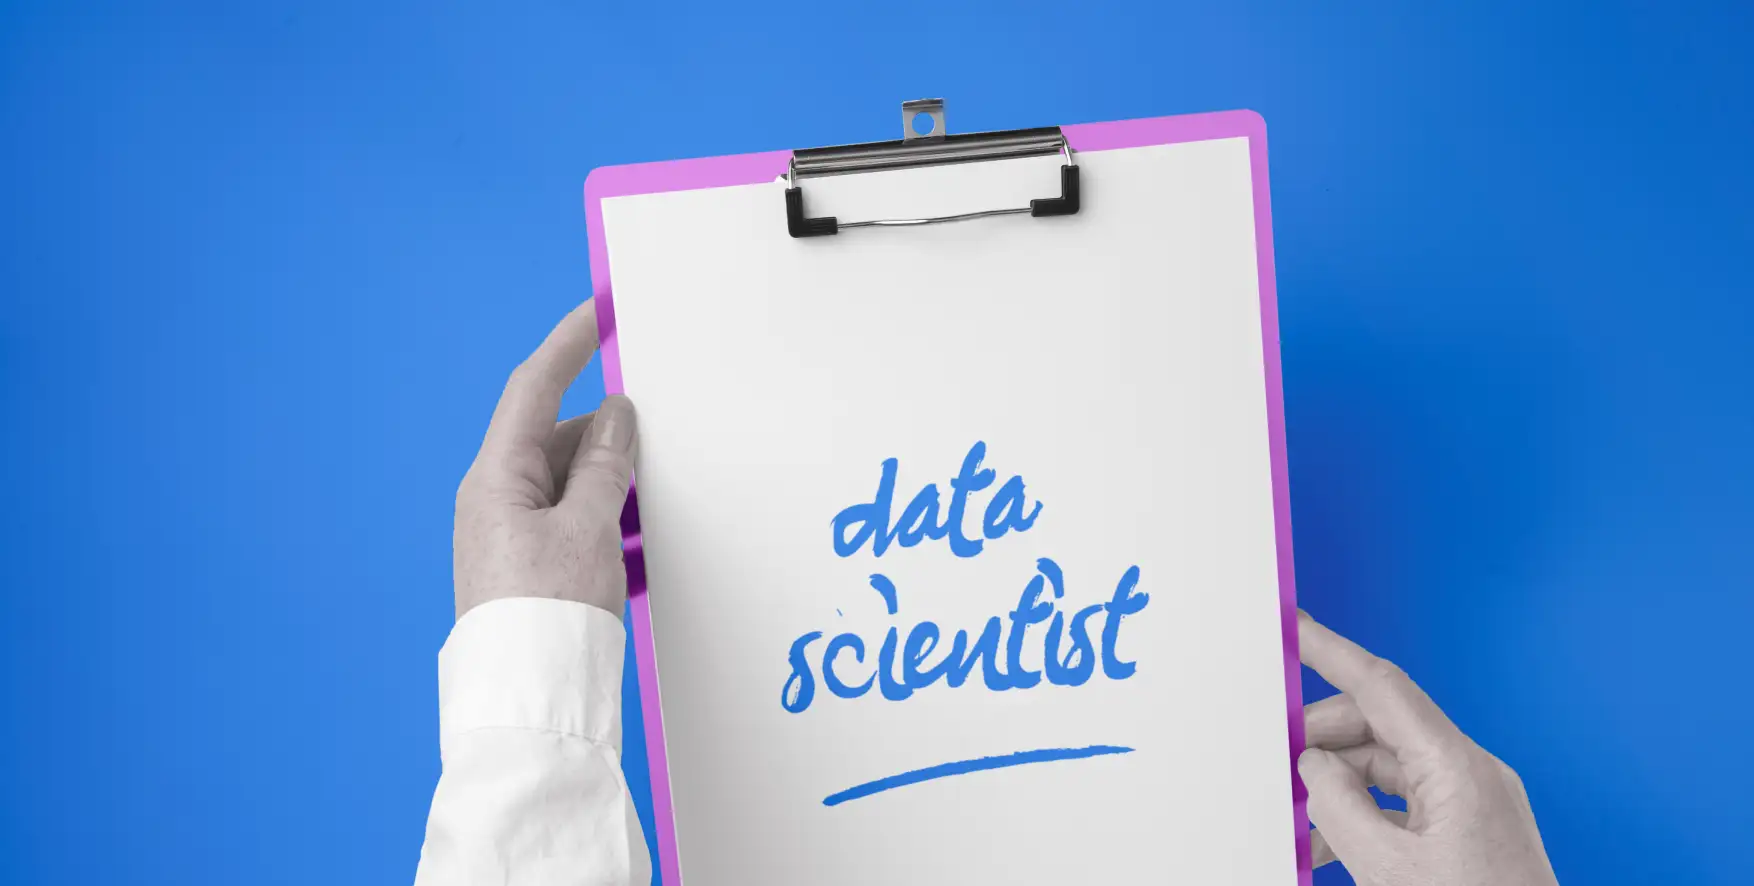 data scientist written on a piece of paper in a clipboard